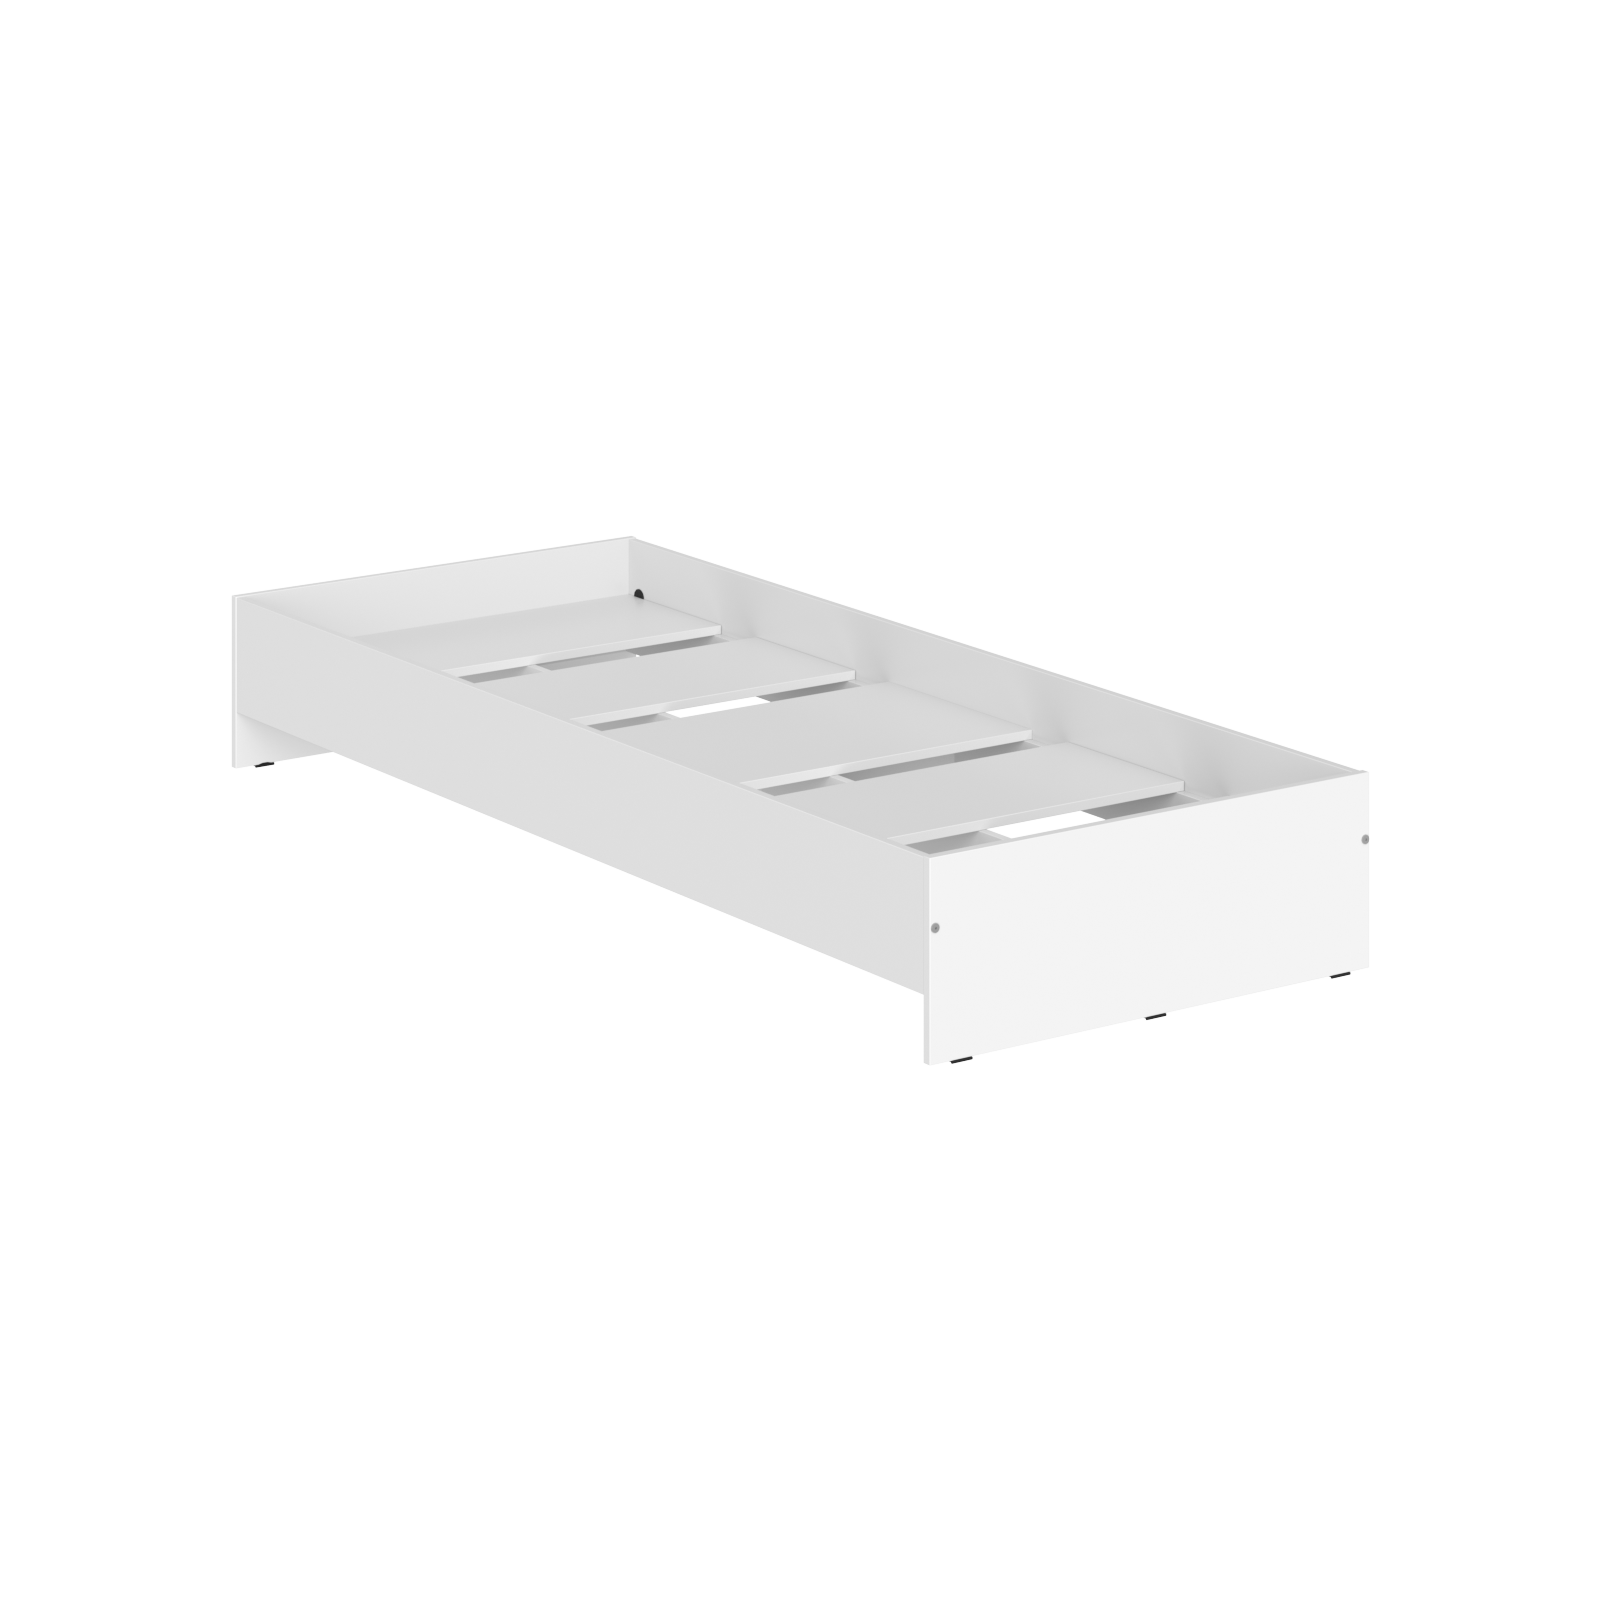 Кровать односпальная без изголовья "Kann" Skyland, (2040х840х300 мм), (арт. KBW 208), Белый ЛДСП